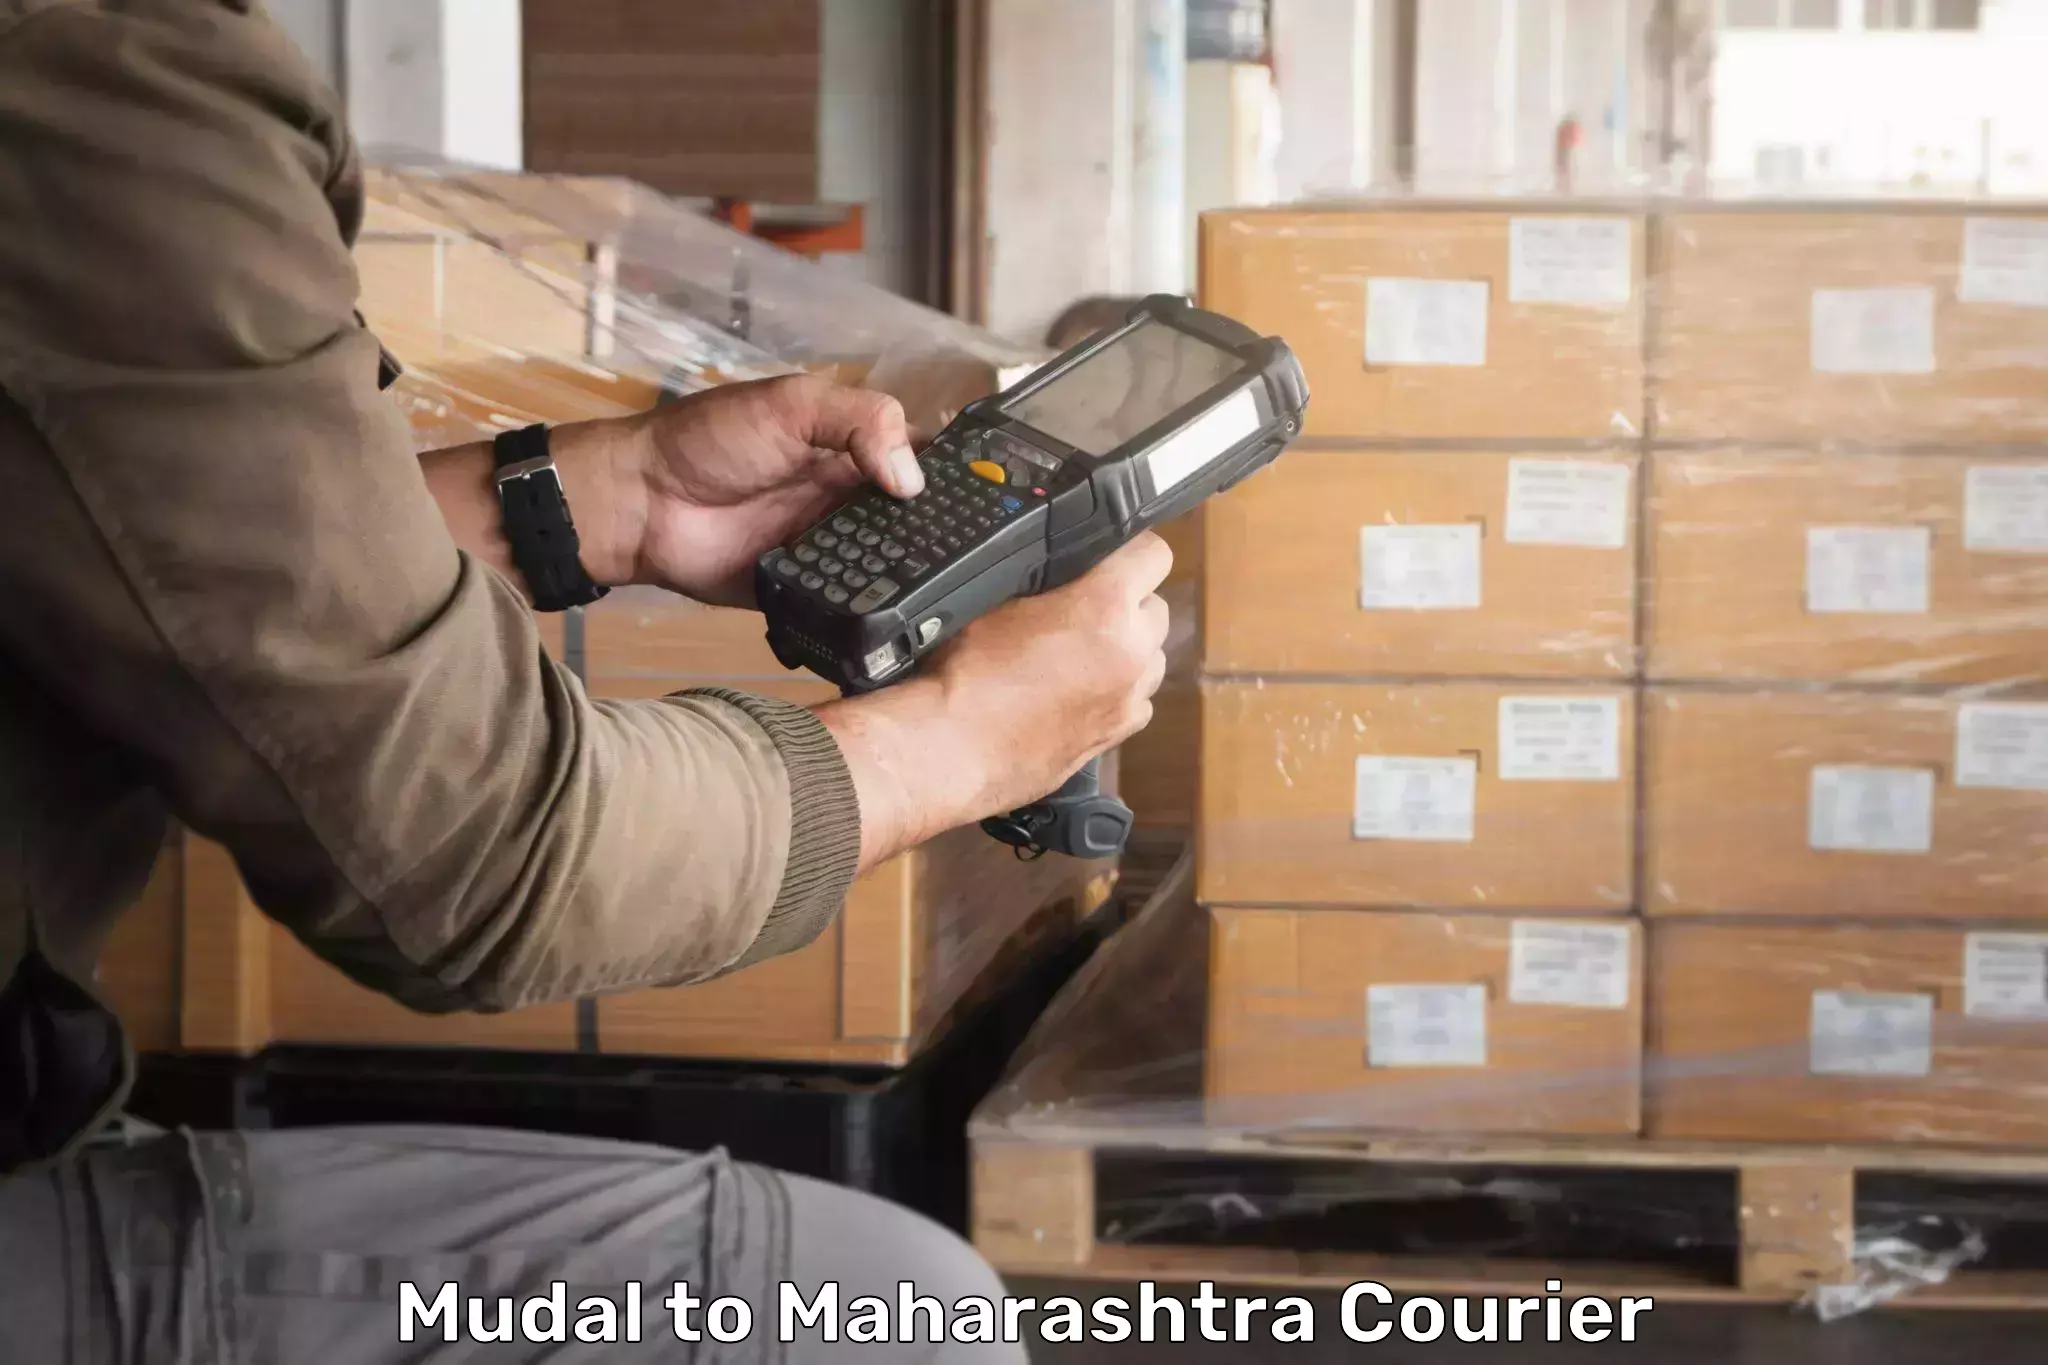 Flexible shipping options Mudal to Nashik